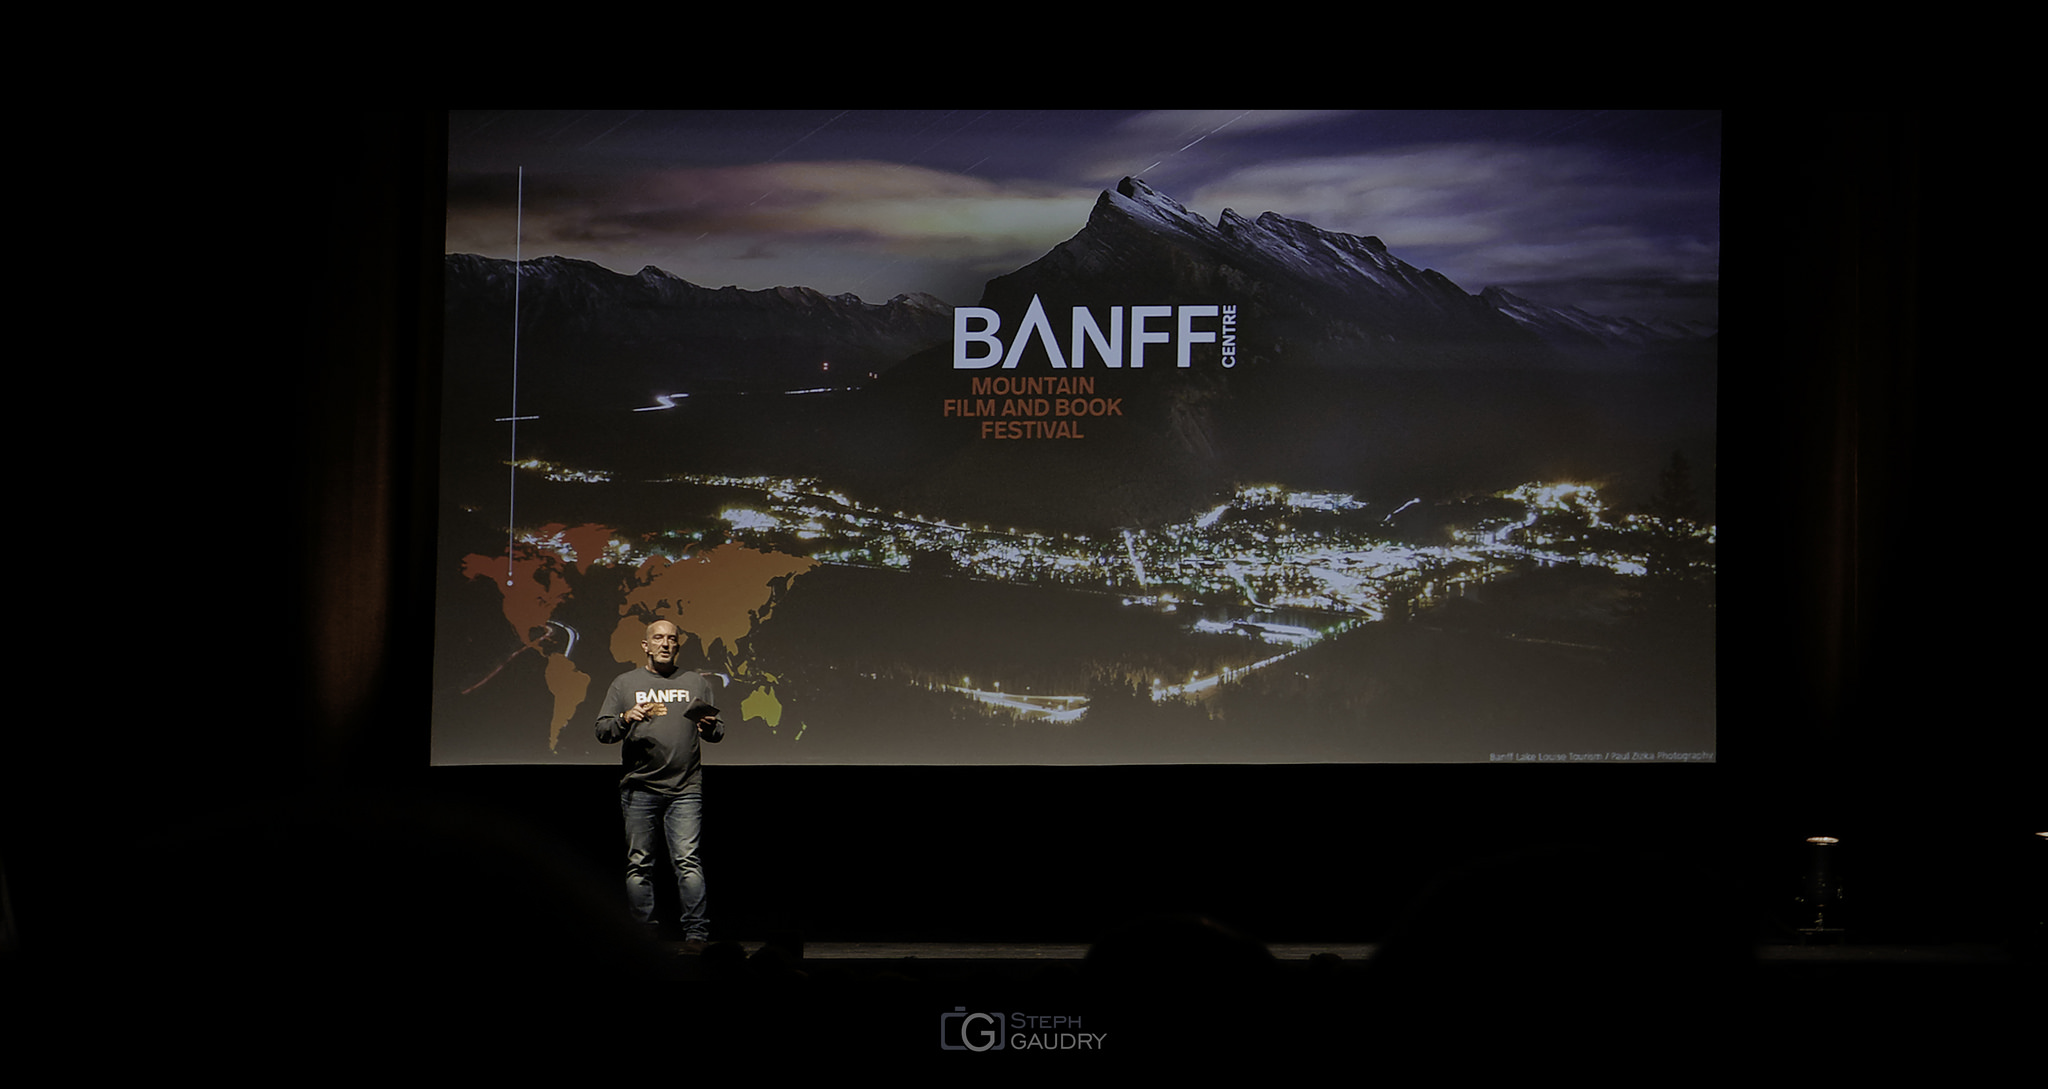 BANFF Mountain film and book festival [Klik om de diavoorstelling te starten]